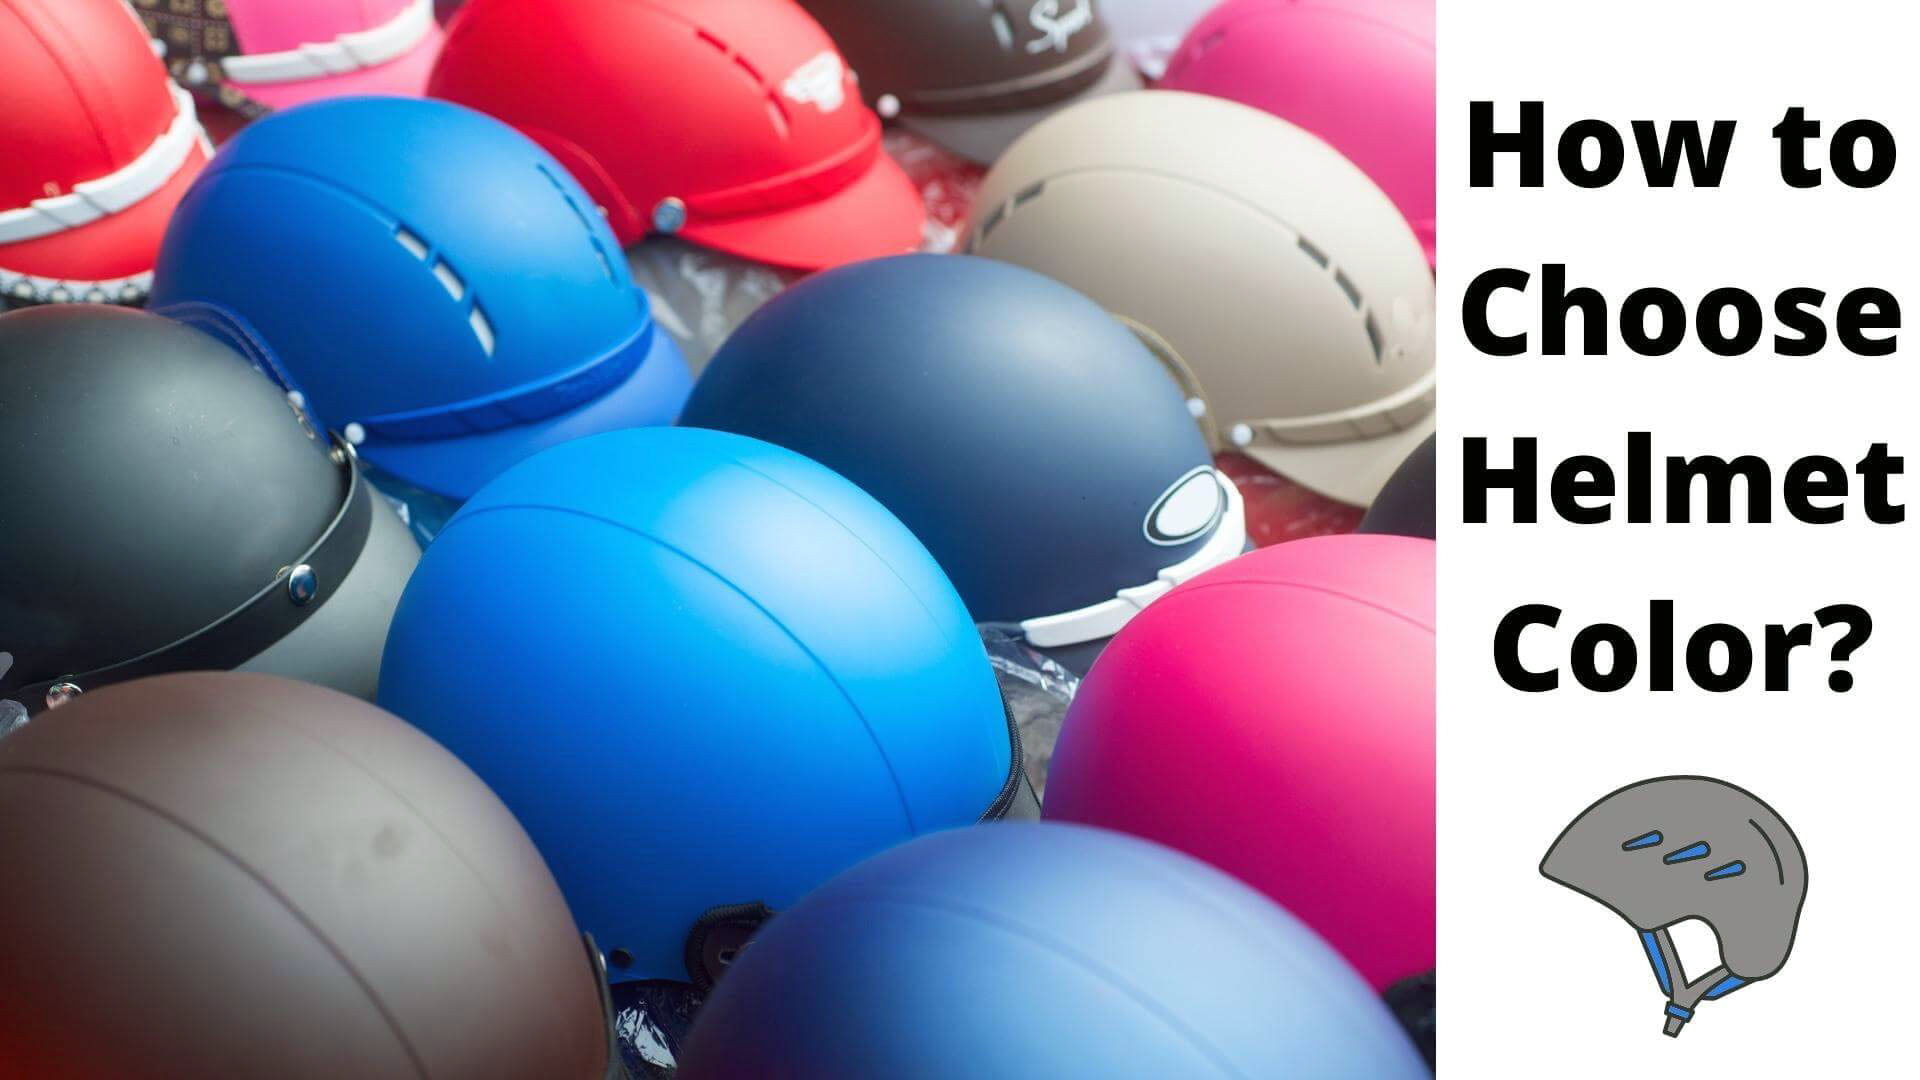 how to choose helmet color?